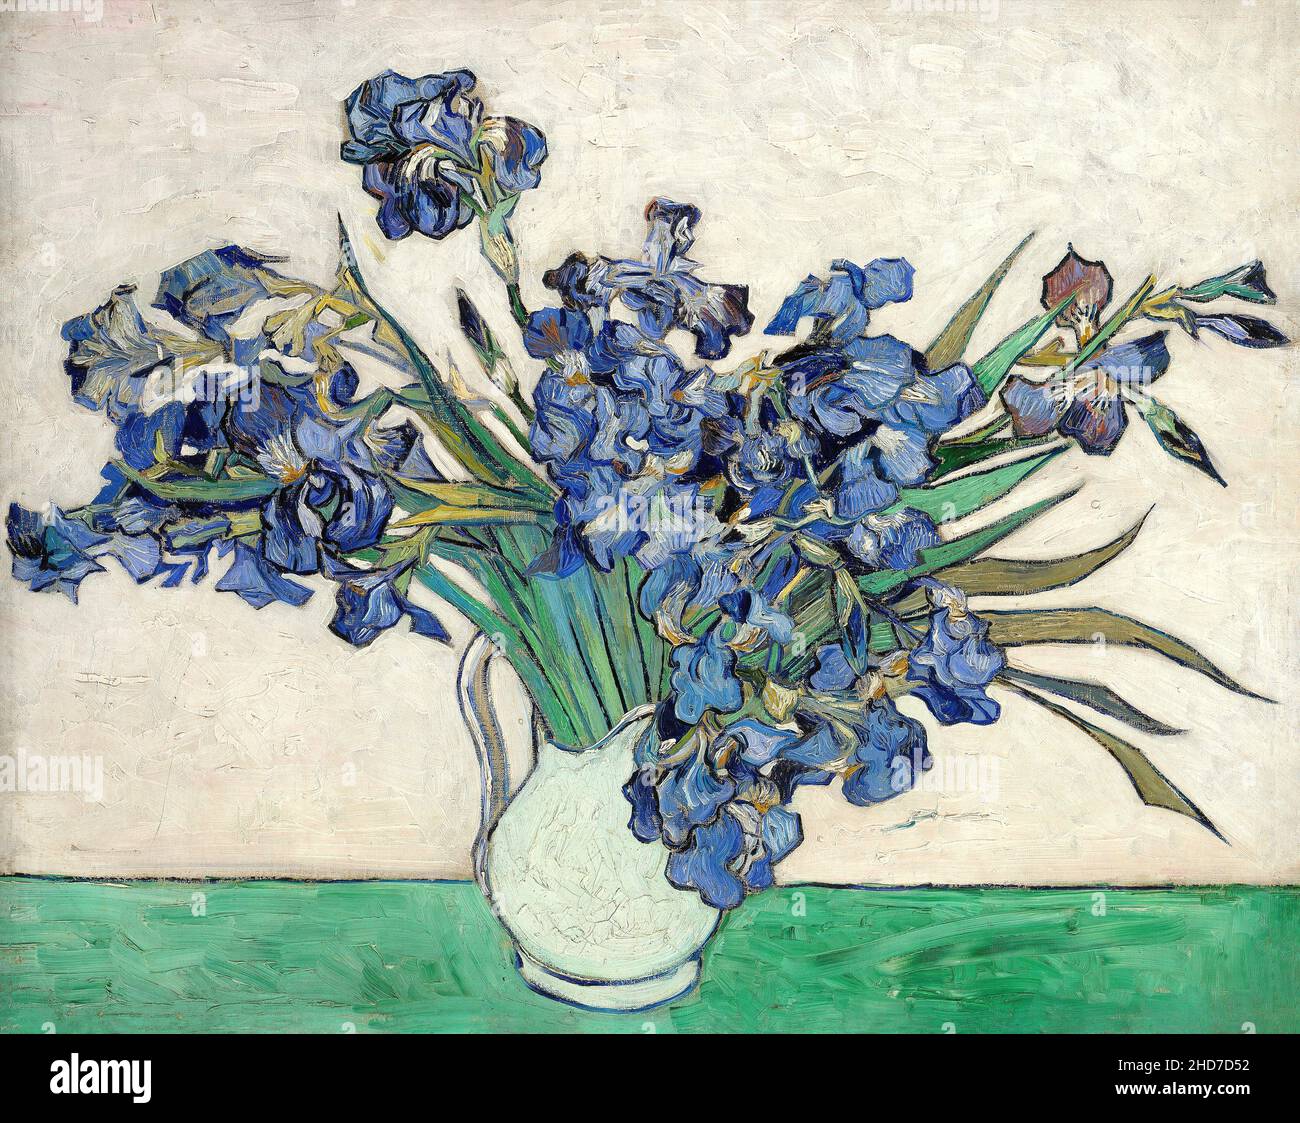 Vincent van Gogh - Irises 1890 - MET Museum - New-York - USA.. Stock Photo